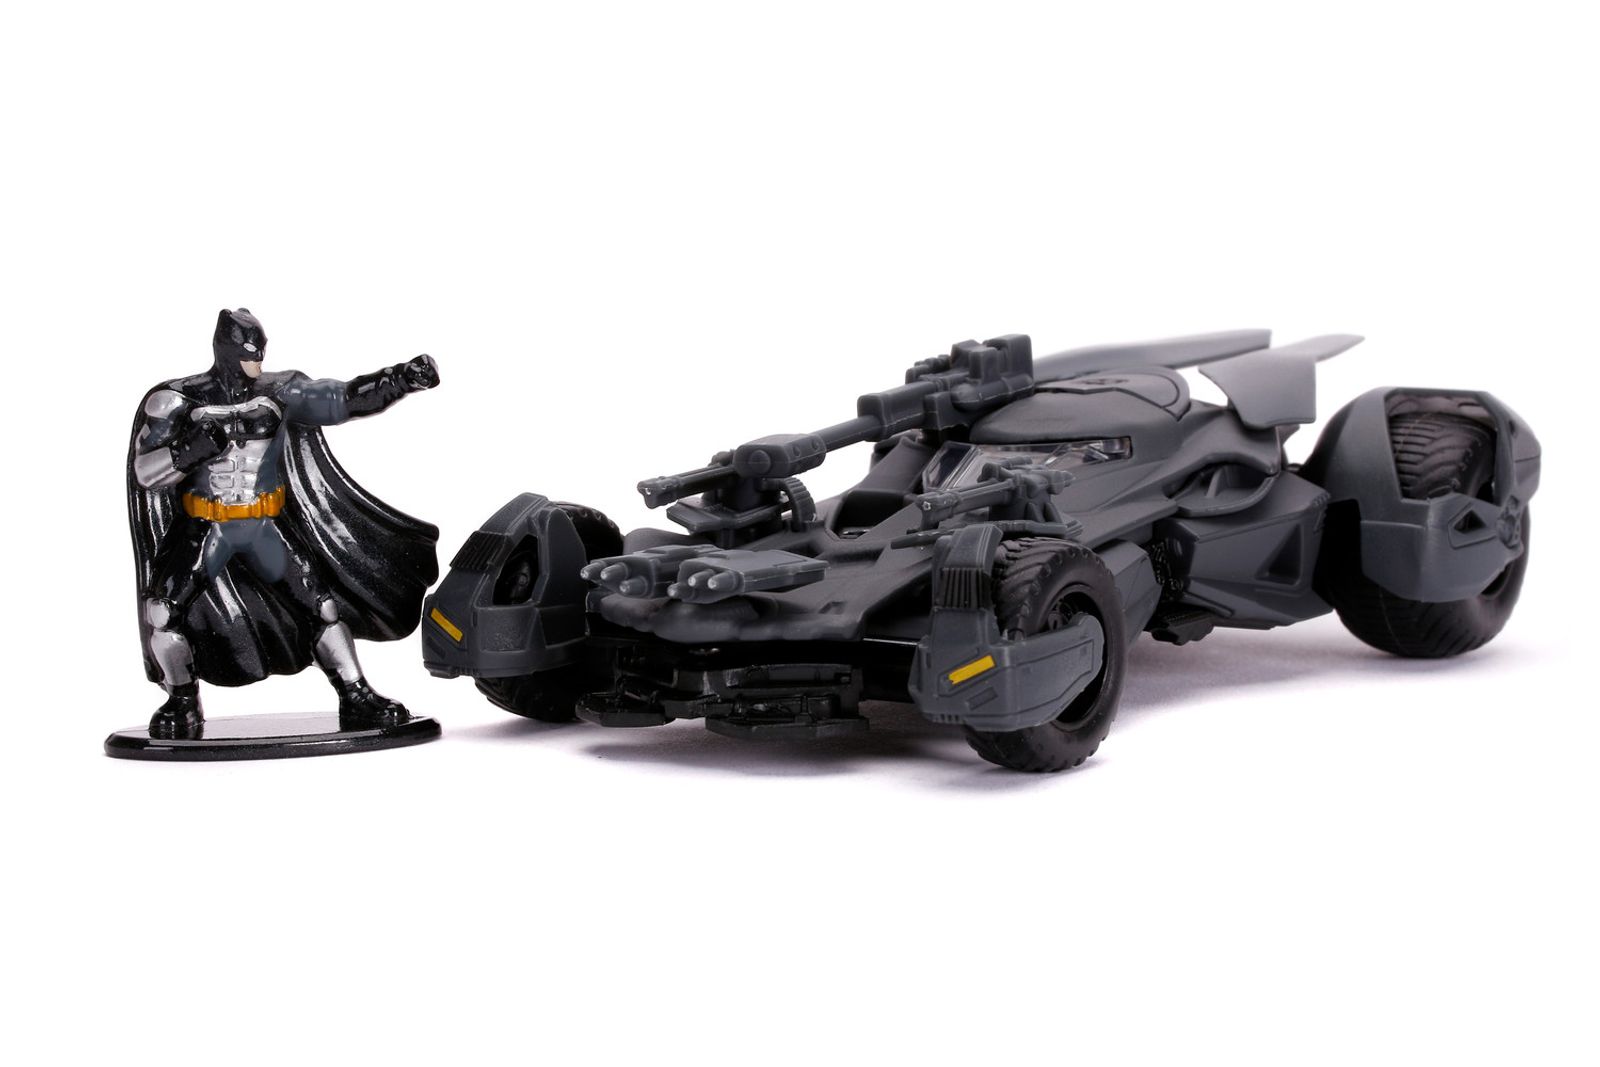 Batman: Justice League Batmobile - Modellfahrzeug, 1:32